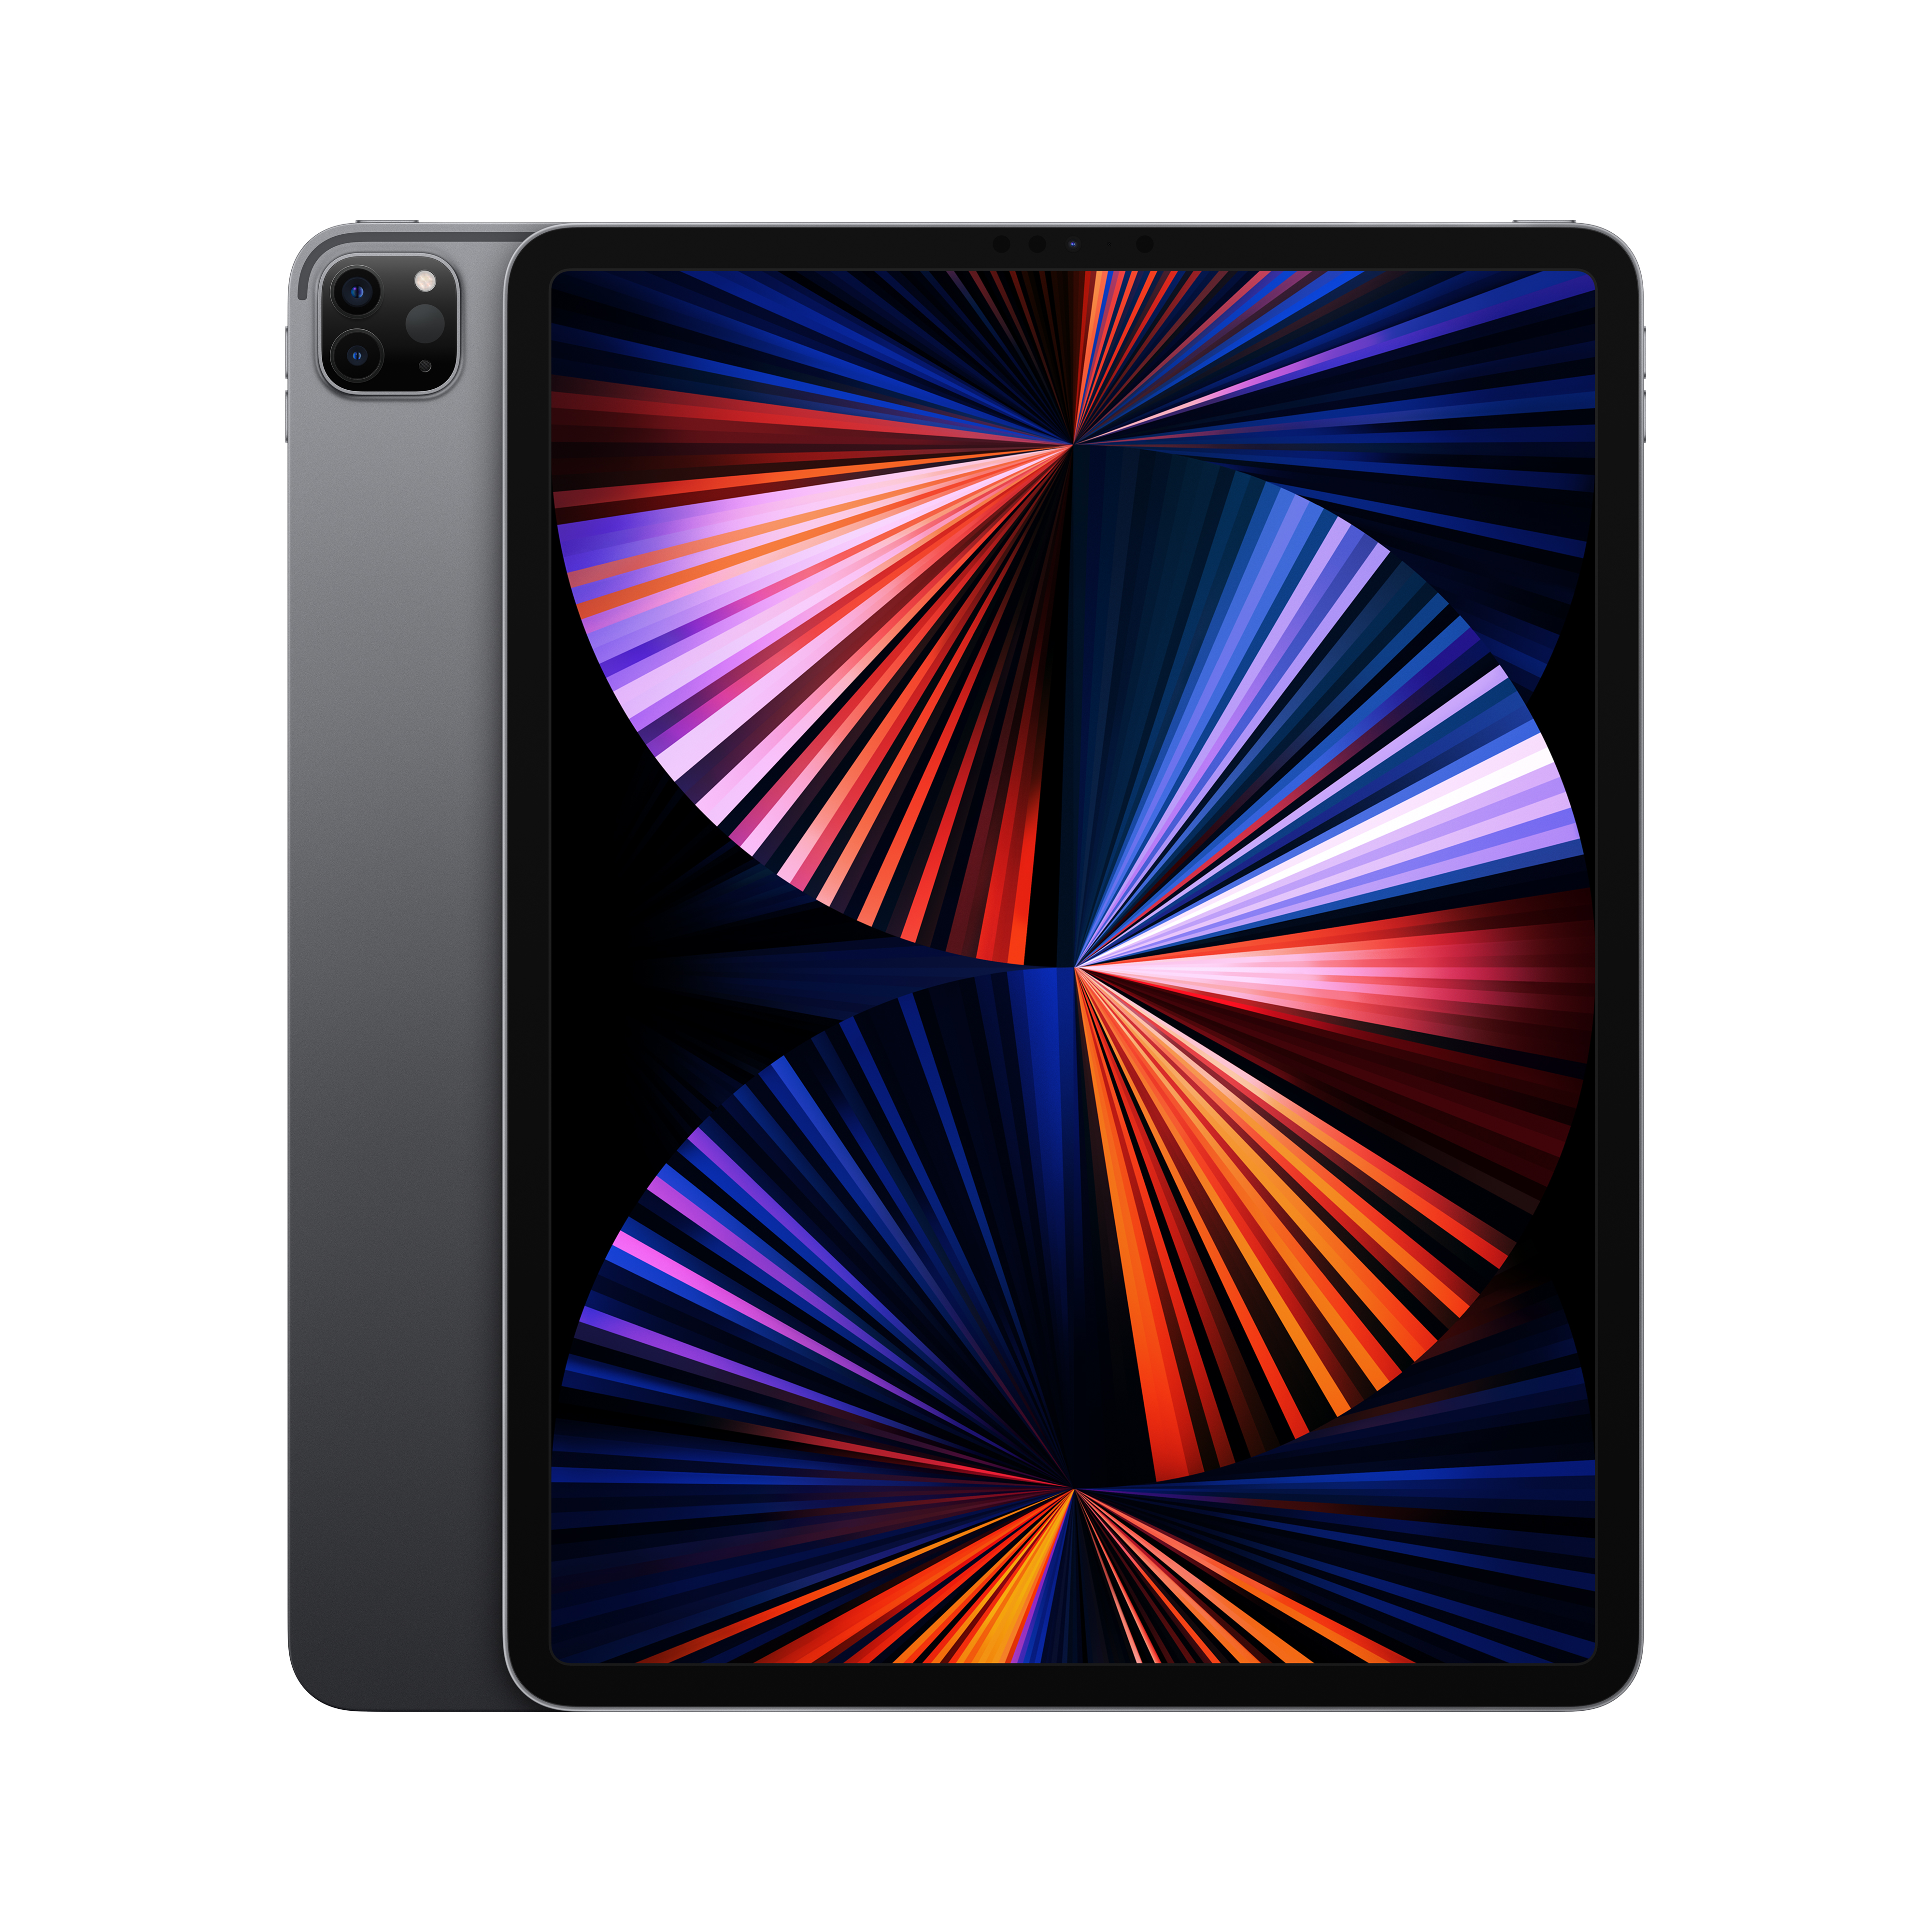 2021 Apple 12.9-inch iPad Pro Wi-Fi 256GB - Space Gray (5th Generation) - image 1 of 9